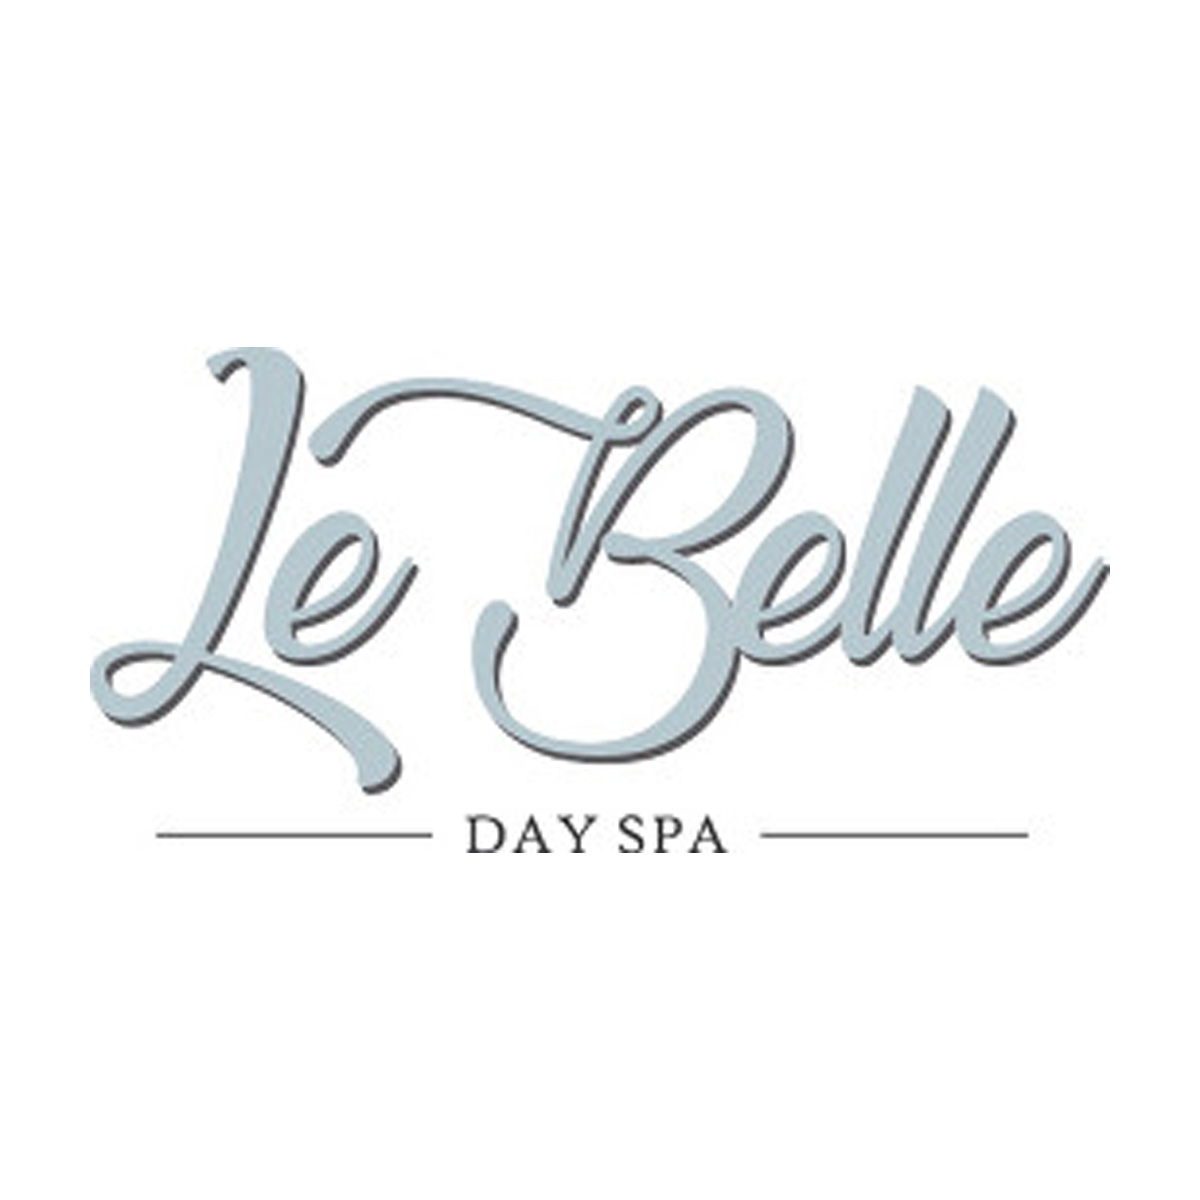 Le Belle Day Spa Logo